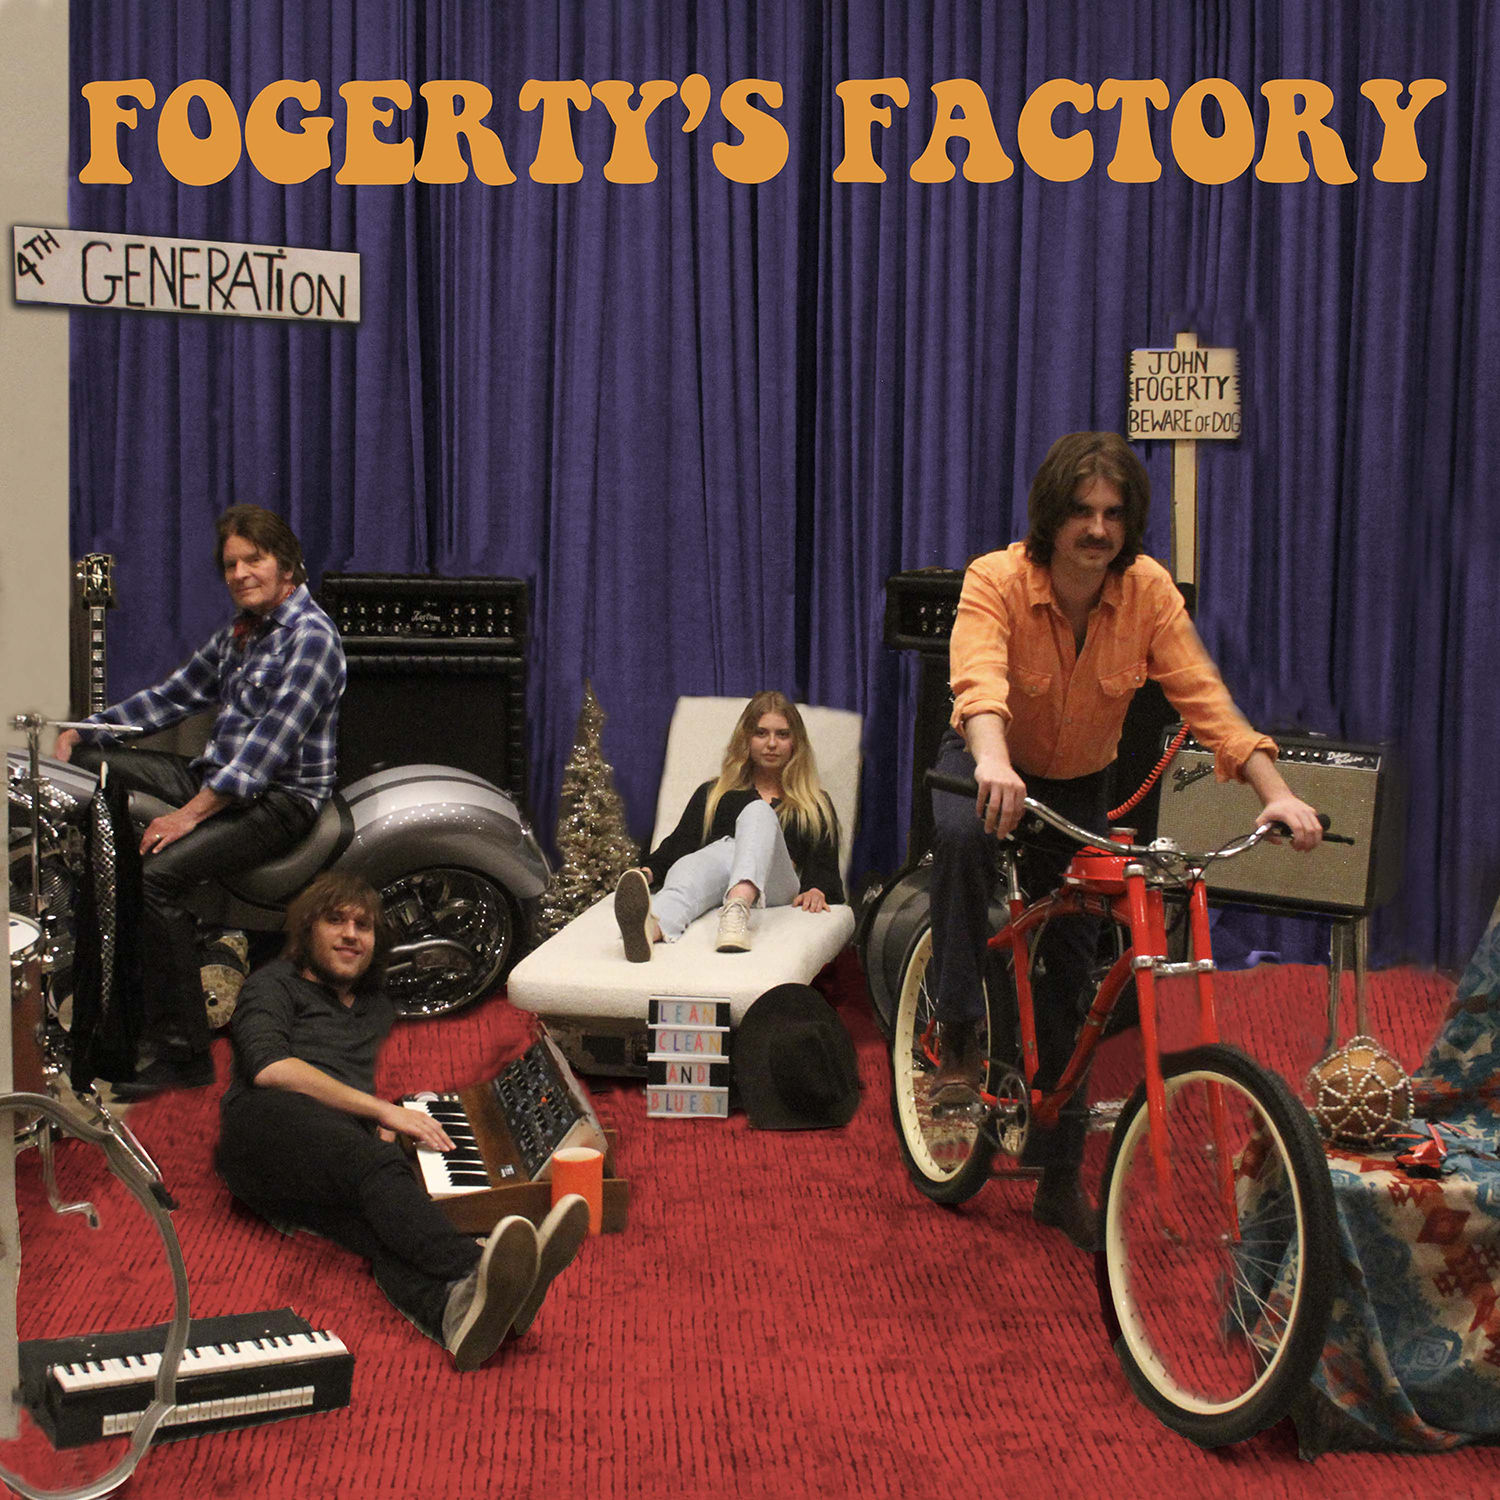 John Fogerty - Fogerty’s Factory (Expanded) (2020) [FLAC 24bit/96kHz]